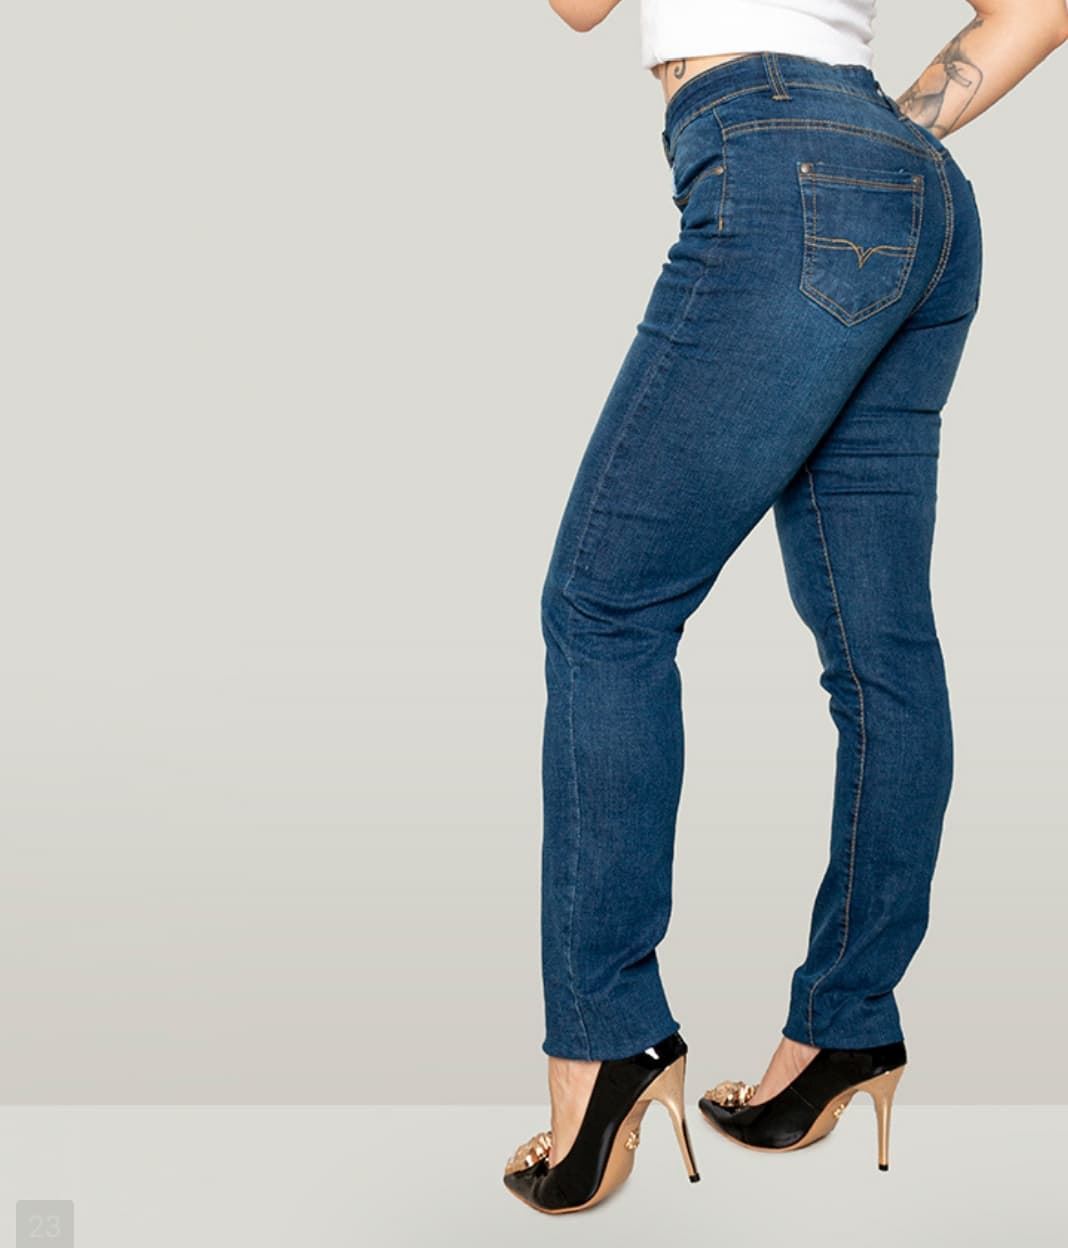 Jeans Primavera - Imagen 3